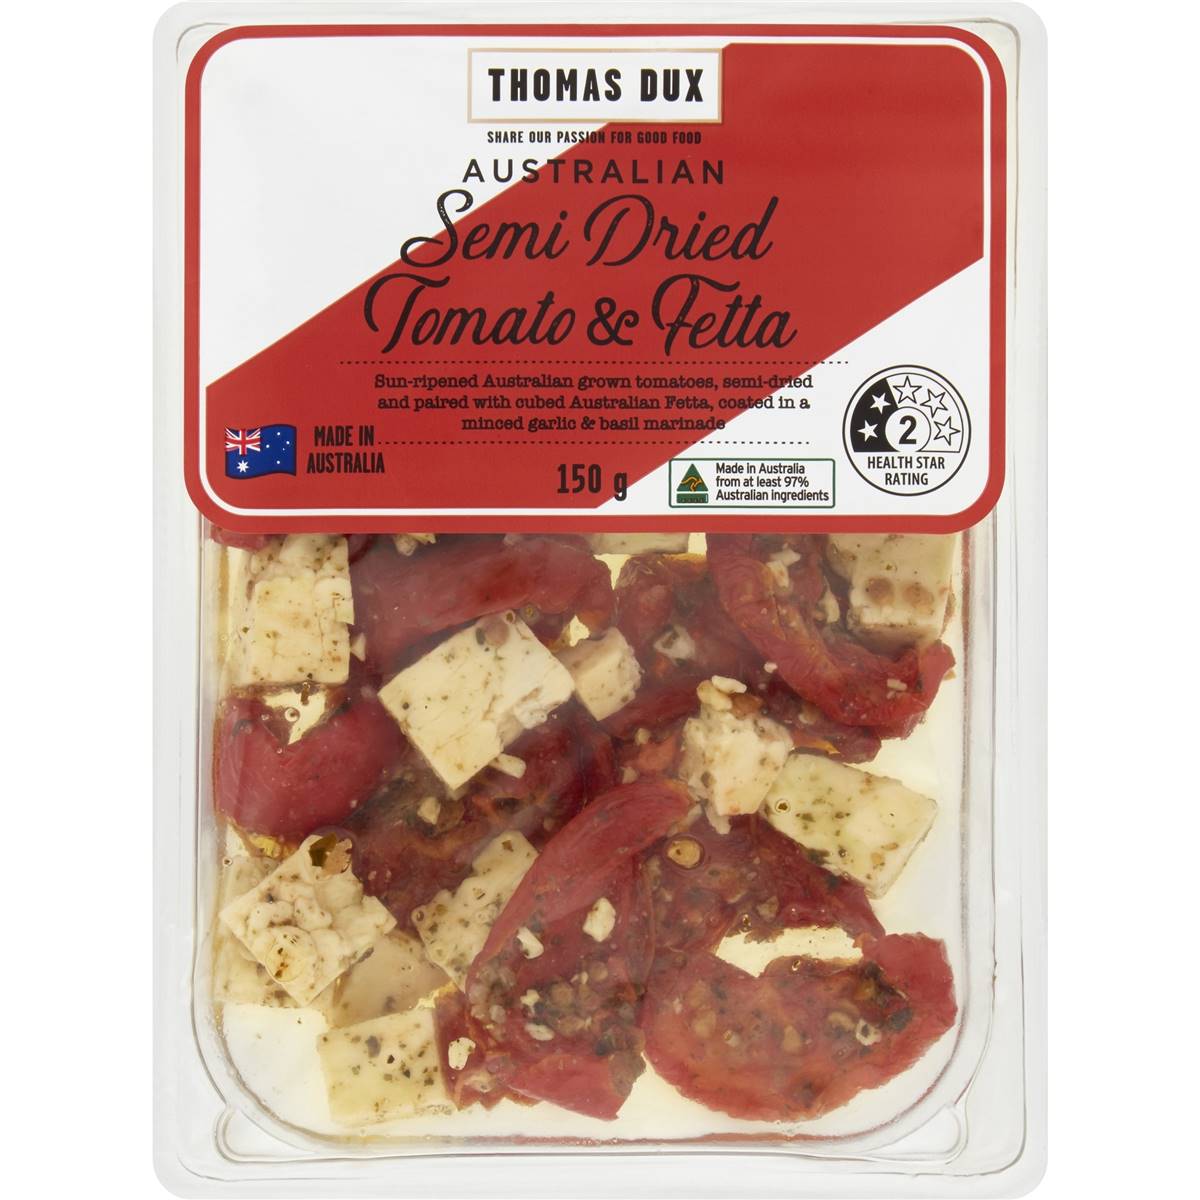 Calories in Thomas Dux Australian Semi Dried Tomato & Fetta